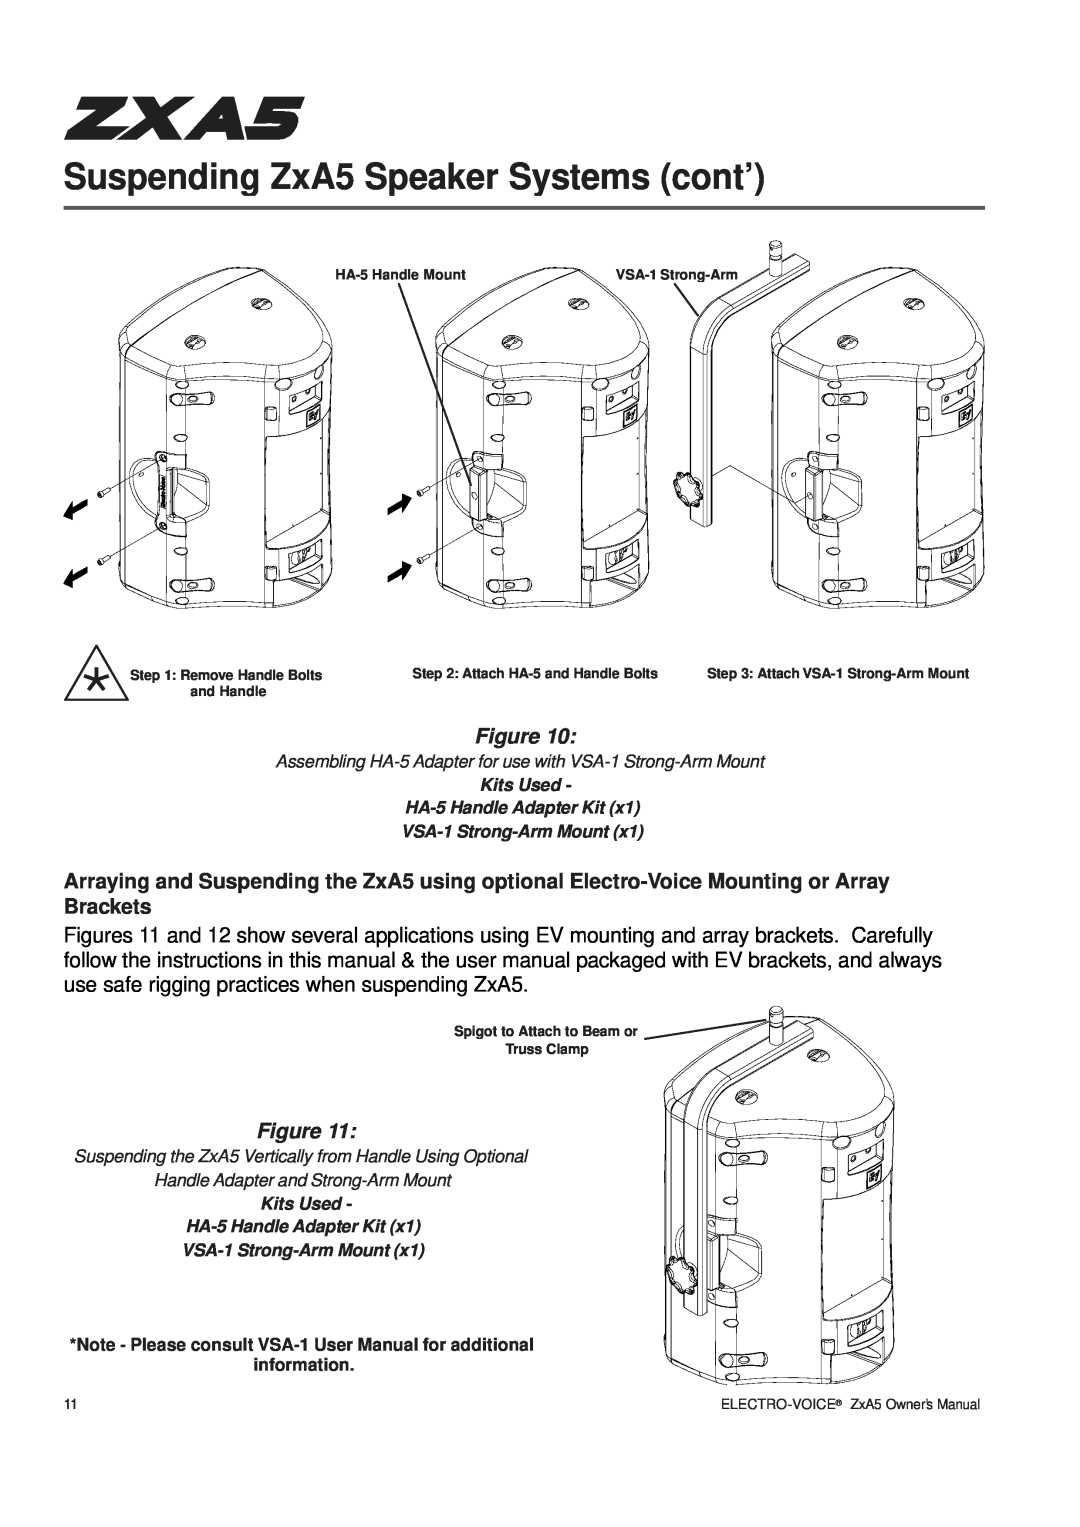 Pentax ZXA5-60, ZXA5-90 Suspending ZxA5 Speaker Systems cont’, Kits Used HA-5Handle Adapter Kit, VSA-1 Strong-ArmMount 